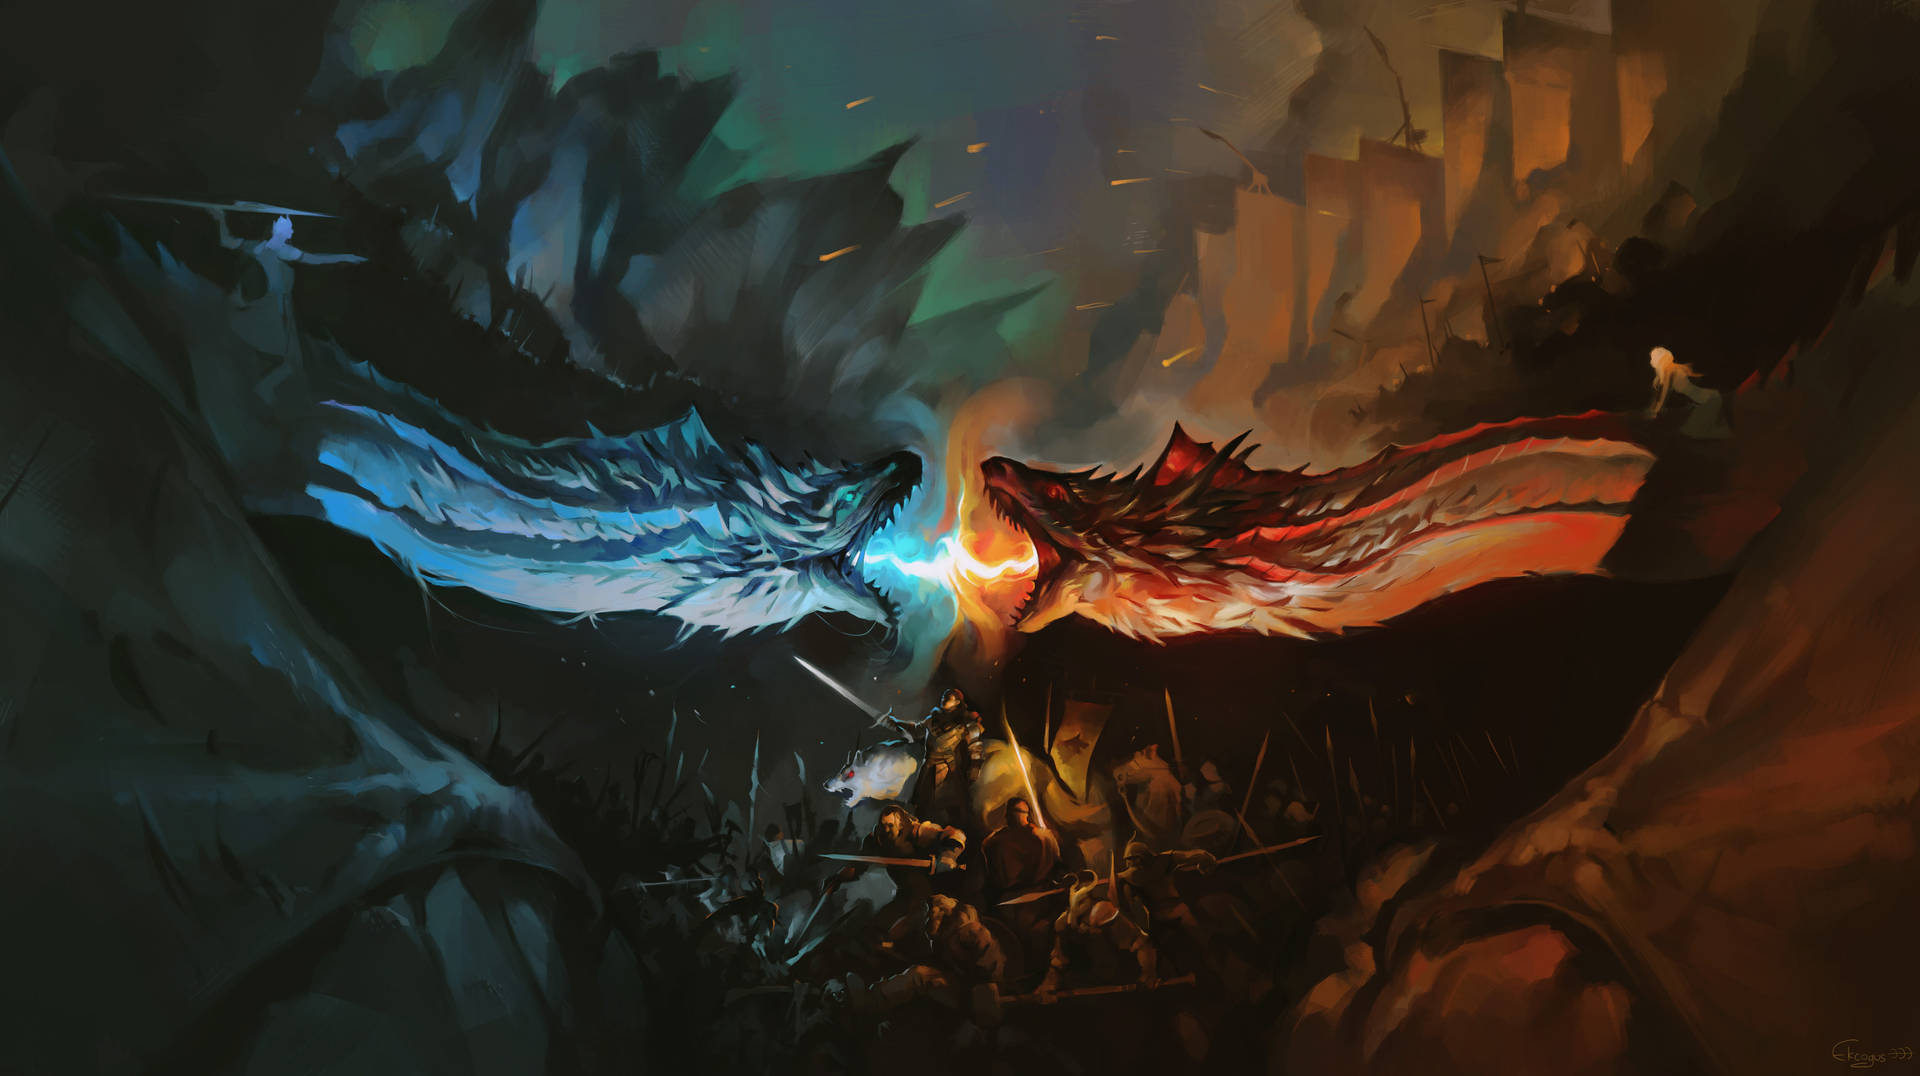 Download Tv 4k Game Of Thrones Battle Of Winterfell Wallpaper | Wallpapers .com